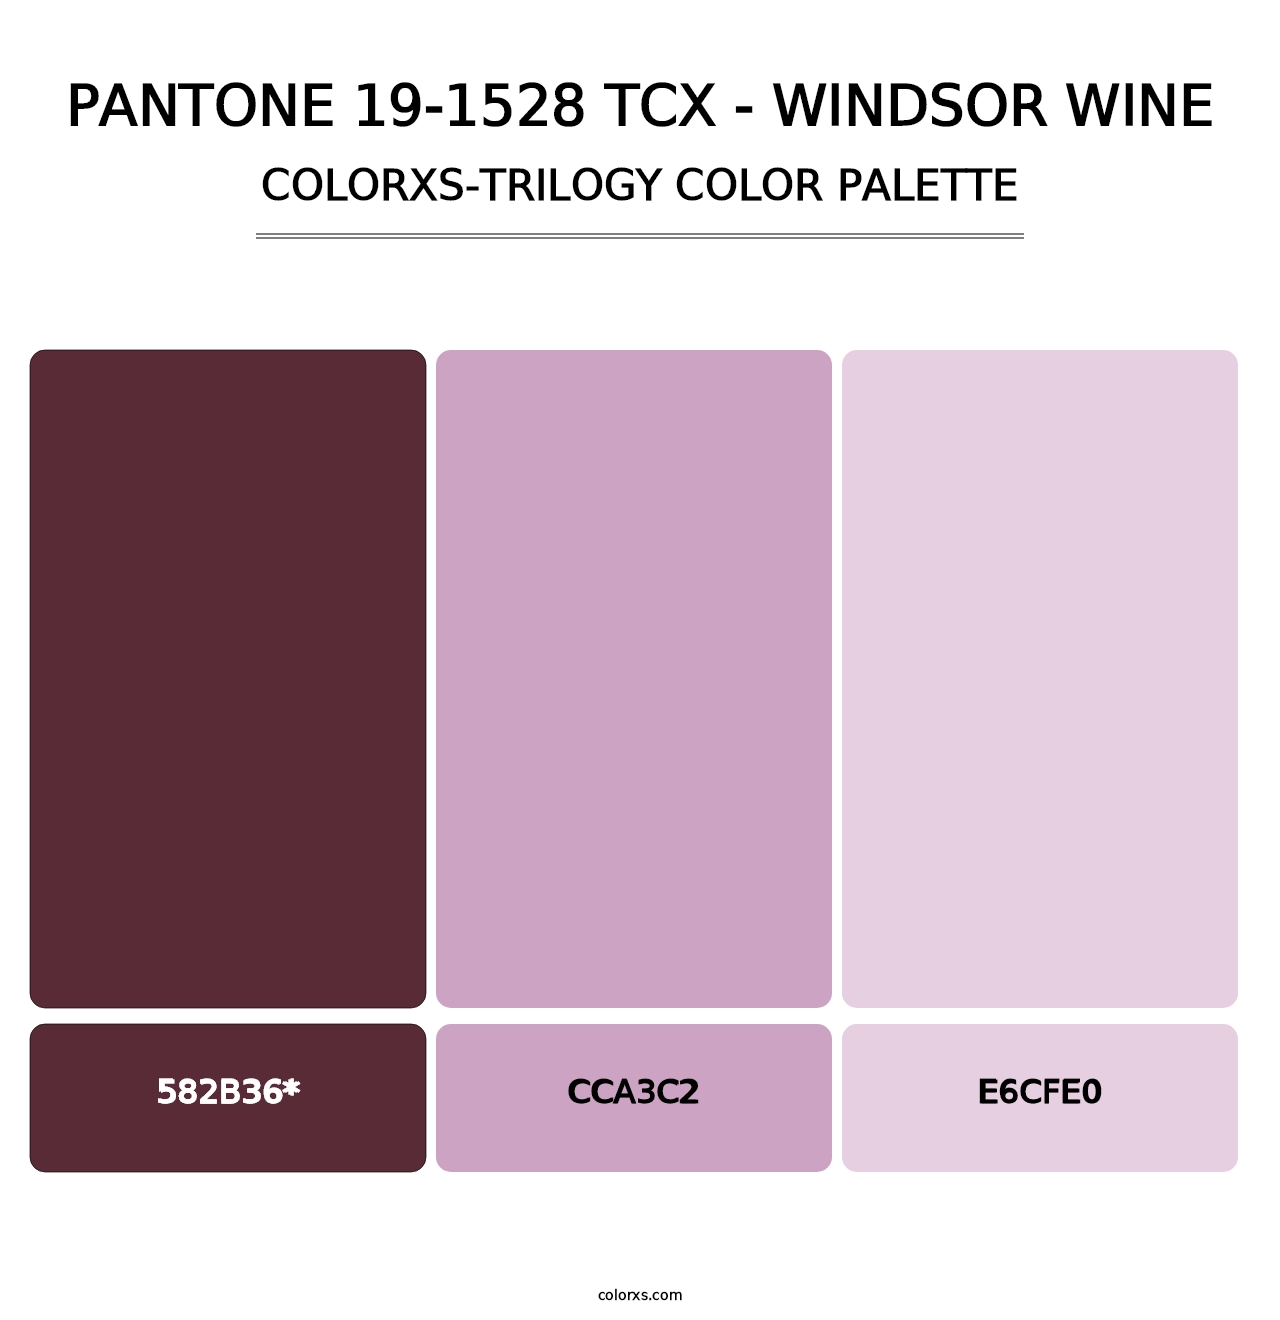 PANTONE 19-1528 TCX - Windsor Wine - Colorxs Trilogy Palette